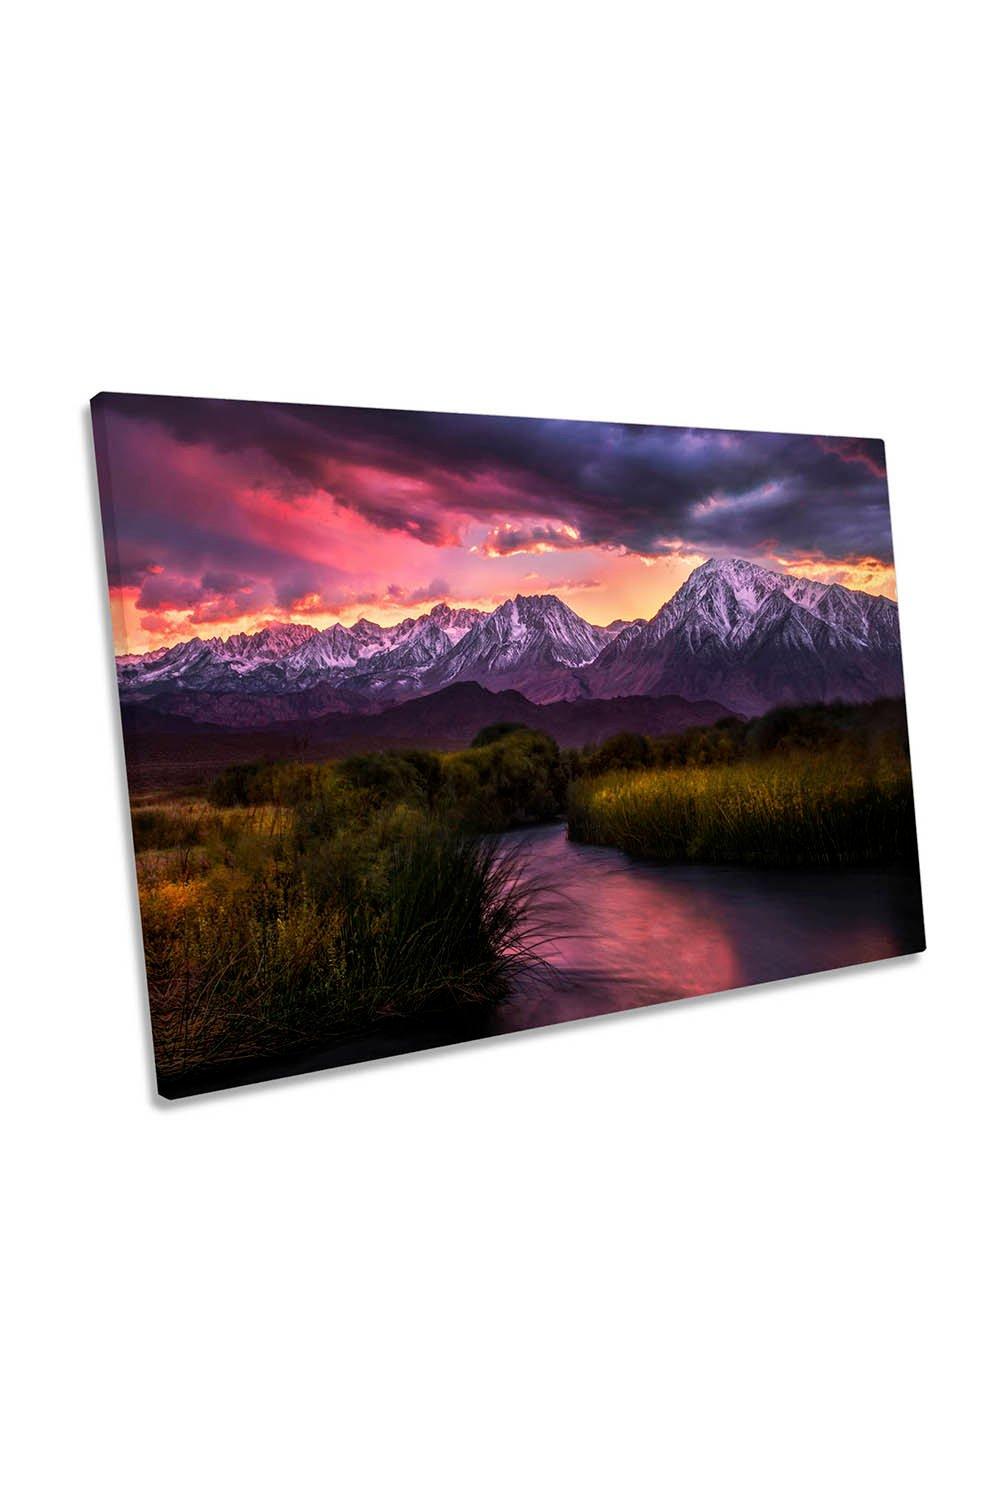 Owens River Alpenglow Mountain Landscape Canvas Wall Art Picture Print